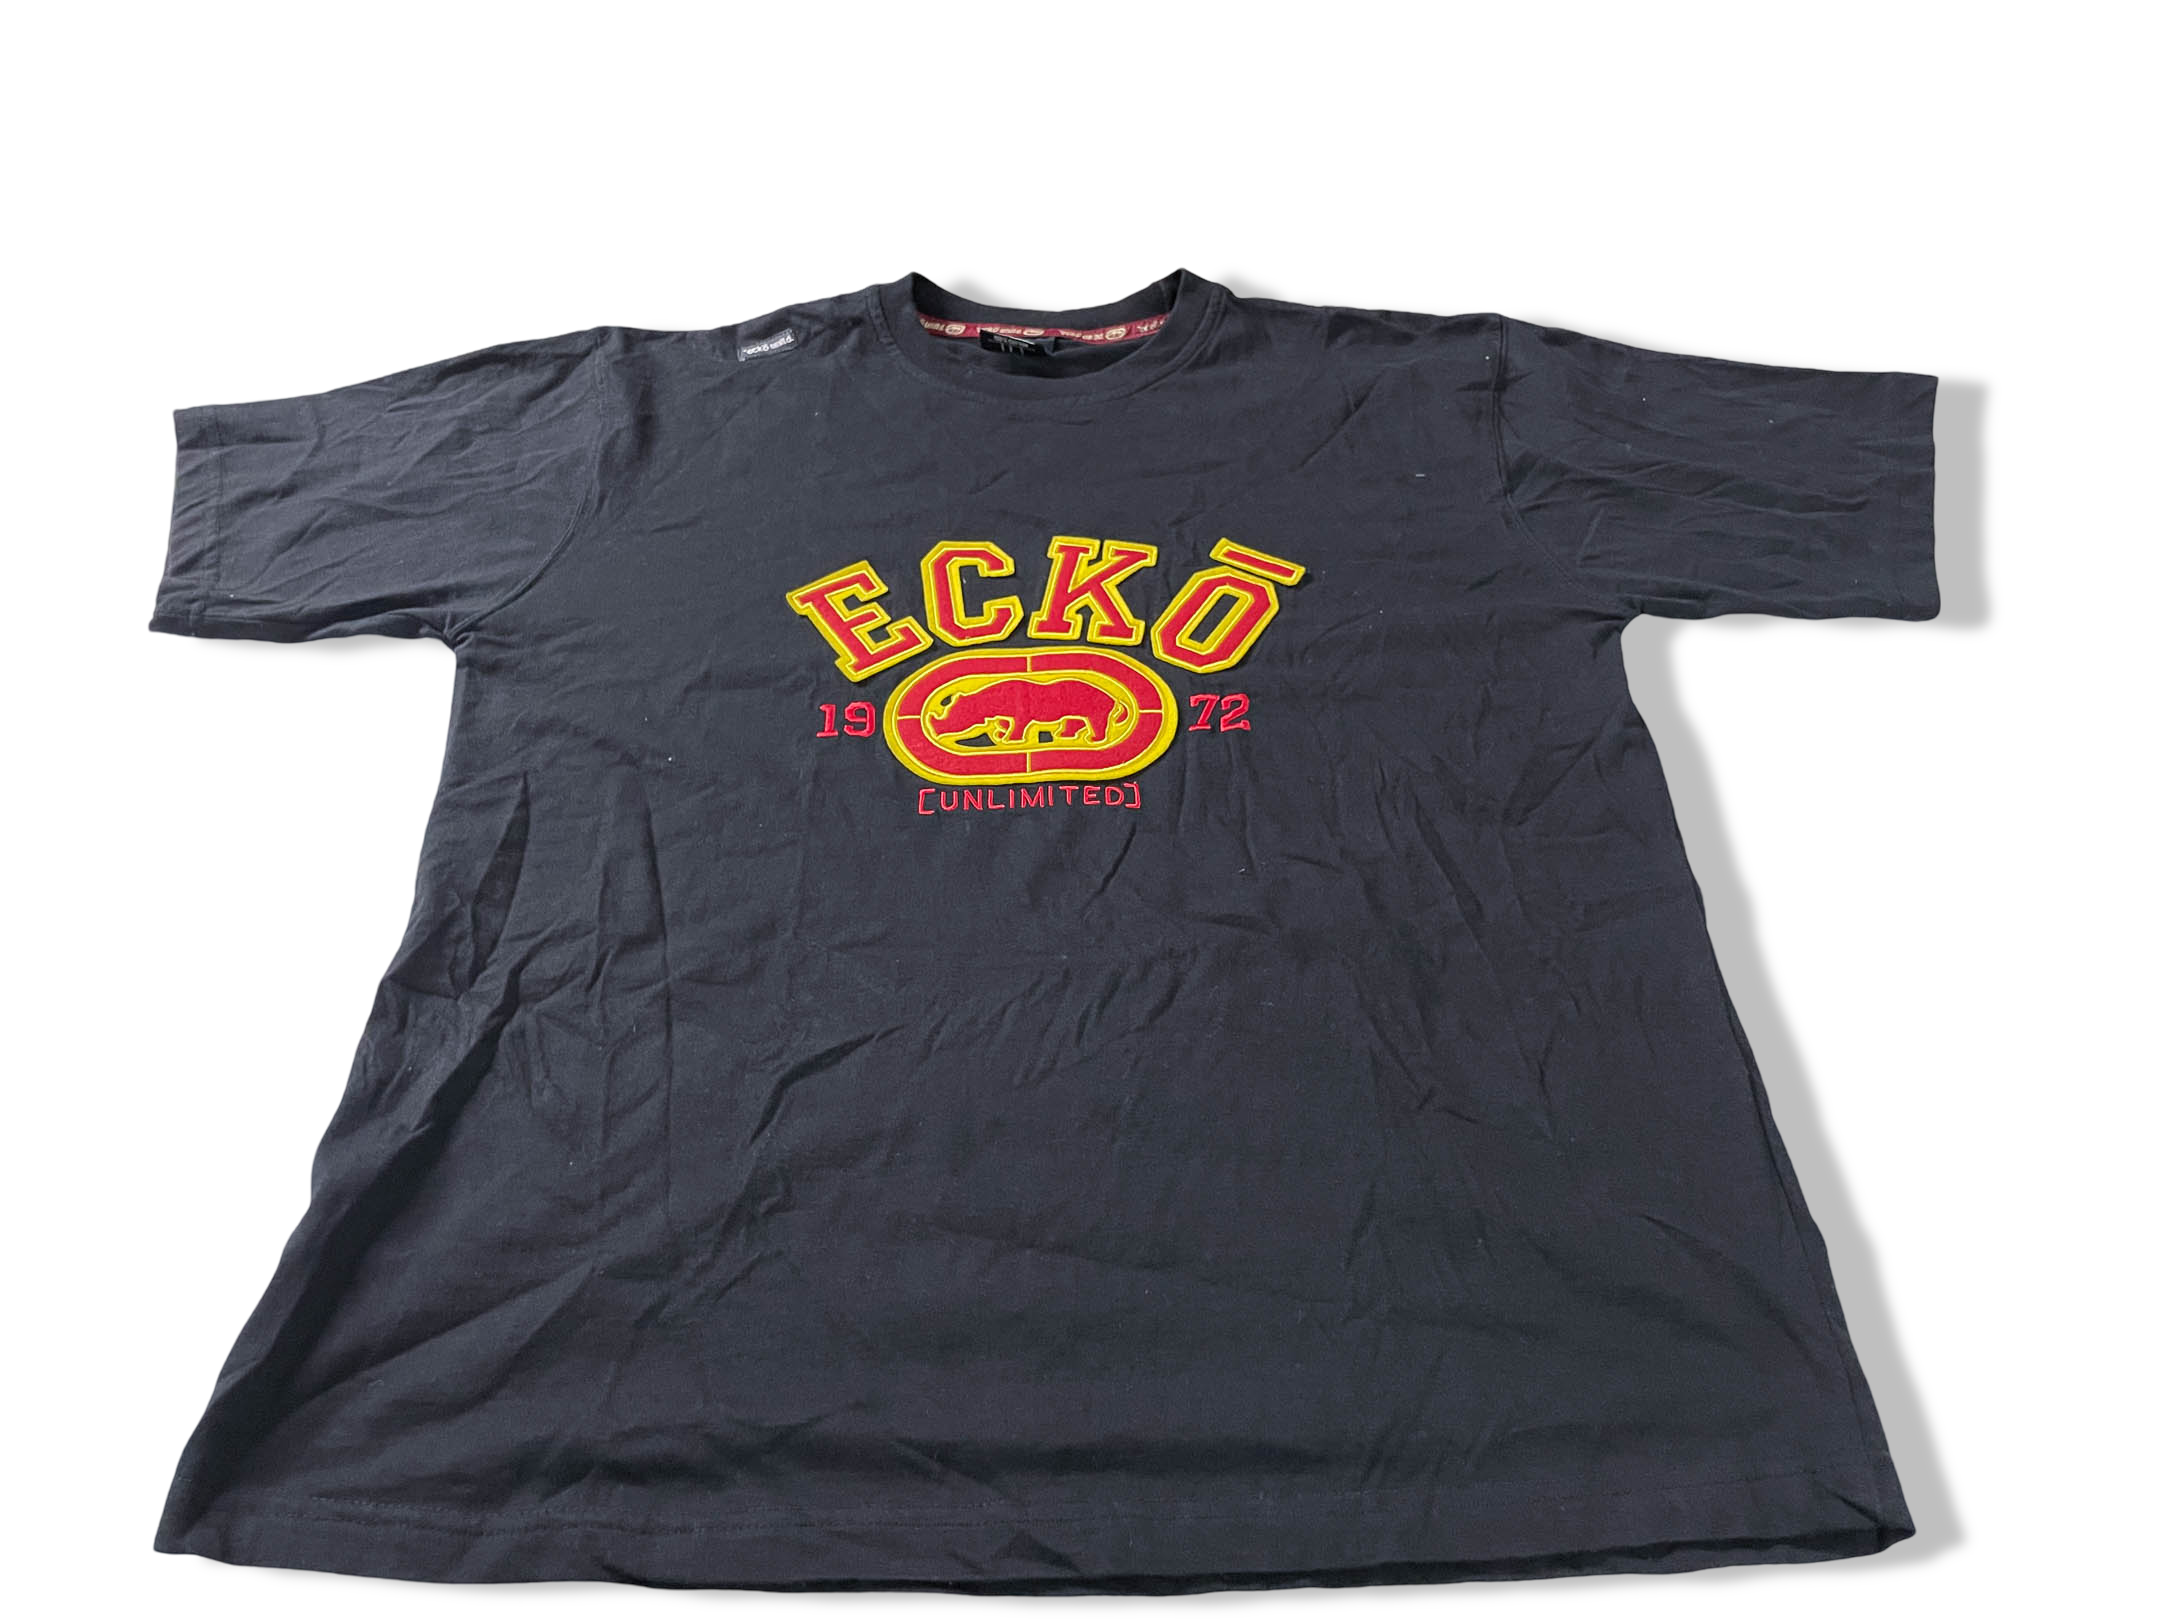 Vintage Men's Ecko UNLTD. graphics 90's black shirt in XL|L29 W23|SKU 4105 